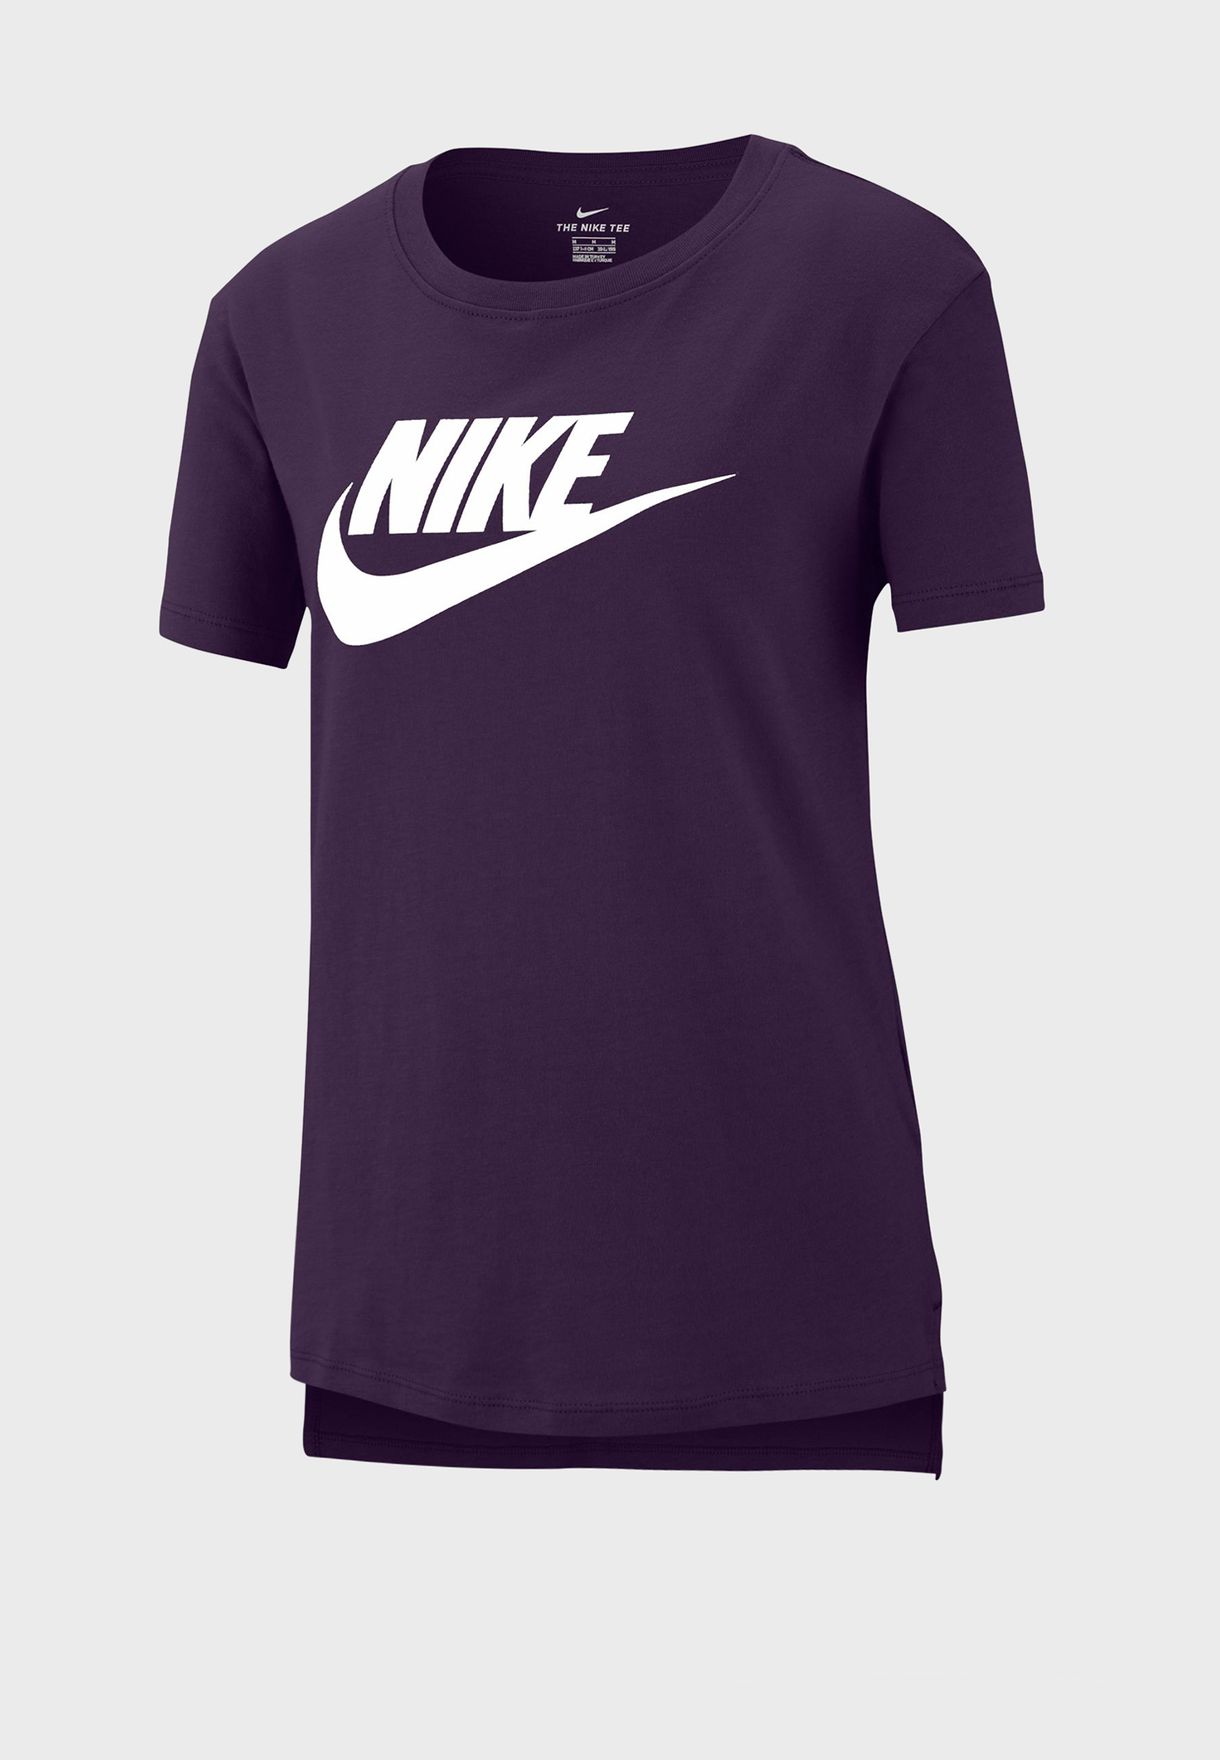 purple and grey nike shirt